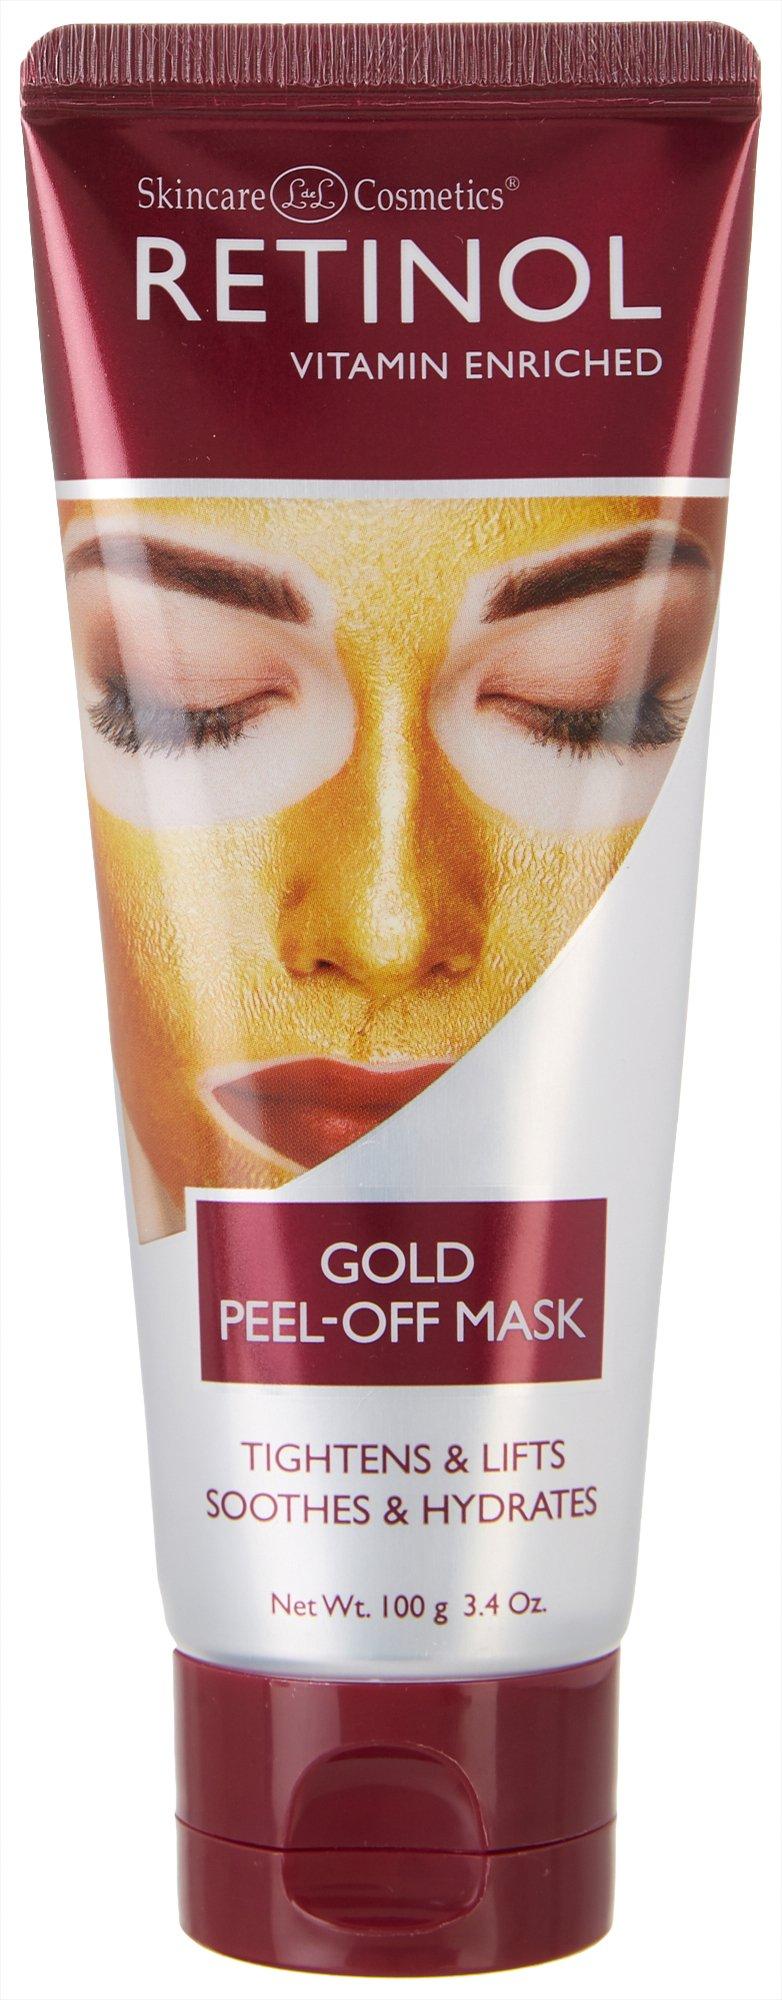 Retinol 3.4 oz Gold Peel-Off Mask